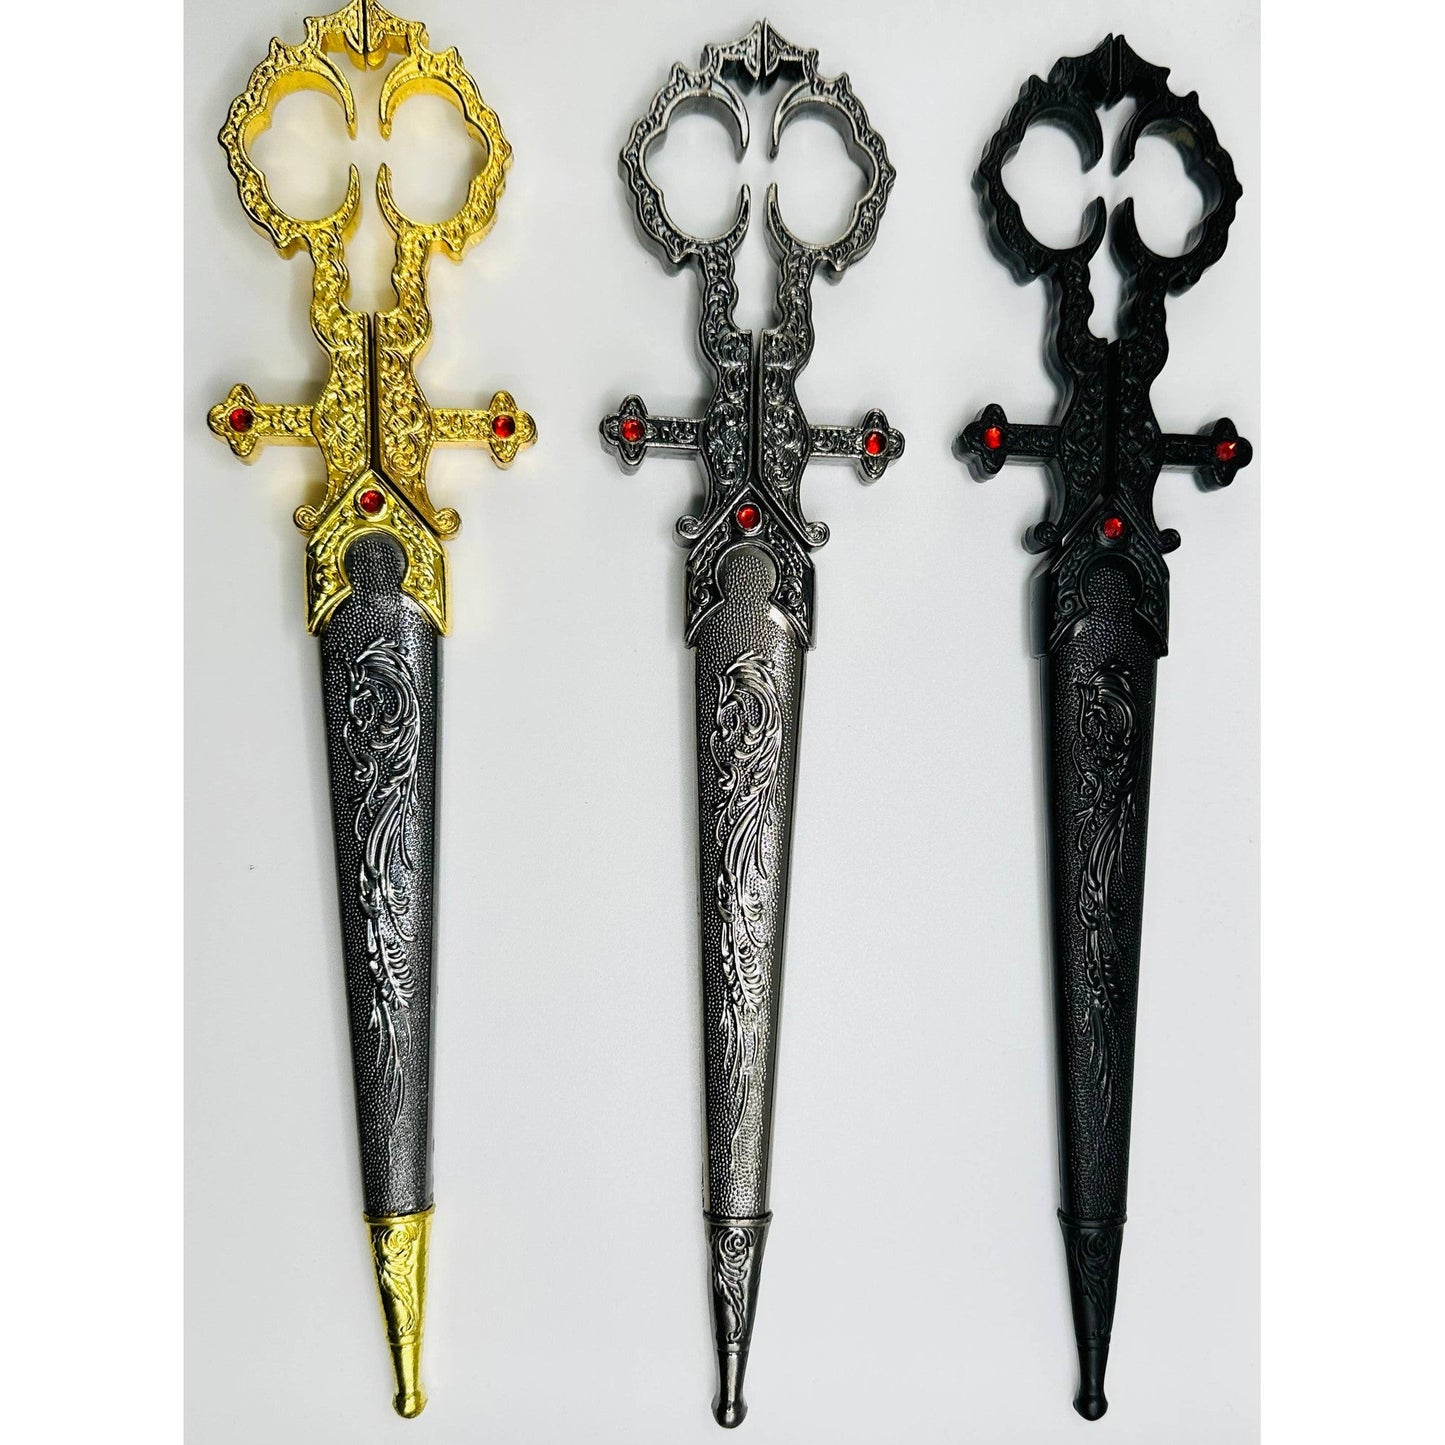 Gold Renaissance Scissors with Scissors Holder | Vintage Sword-like